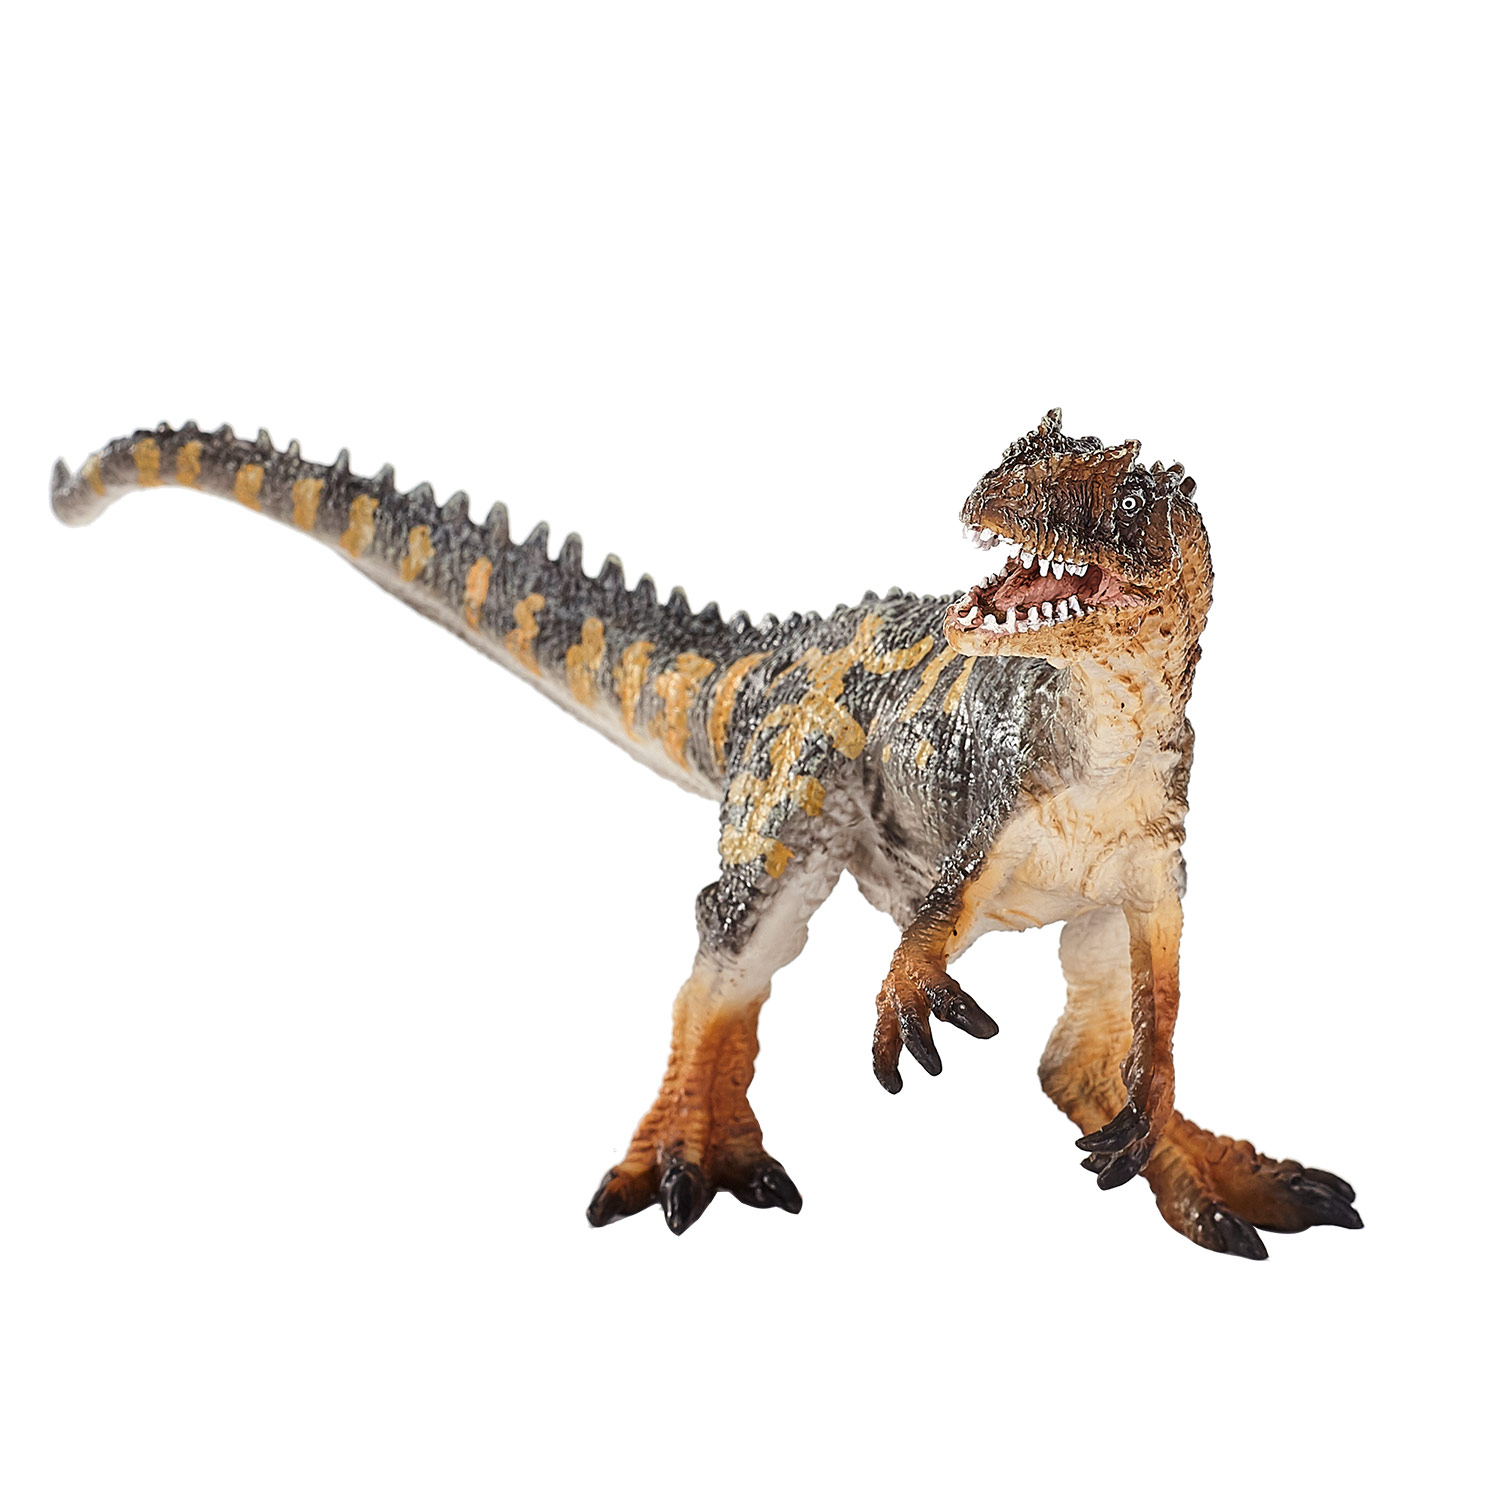 Mojo Vorgeschichte Allosaurus - 387274